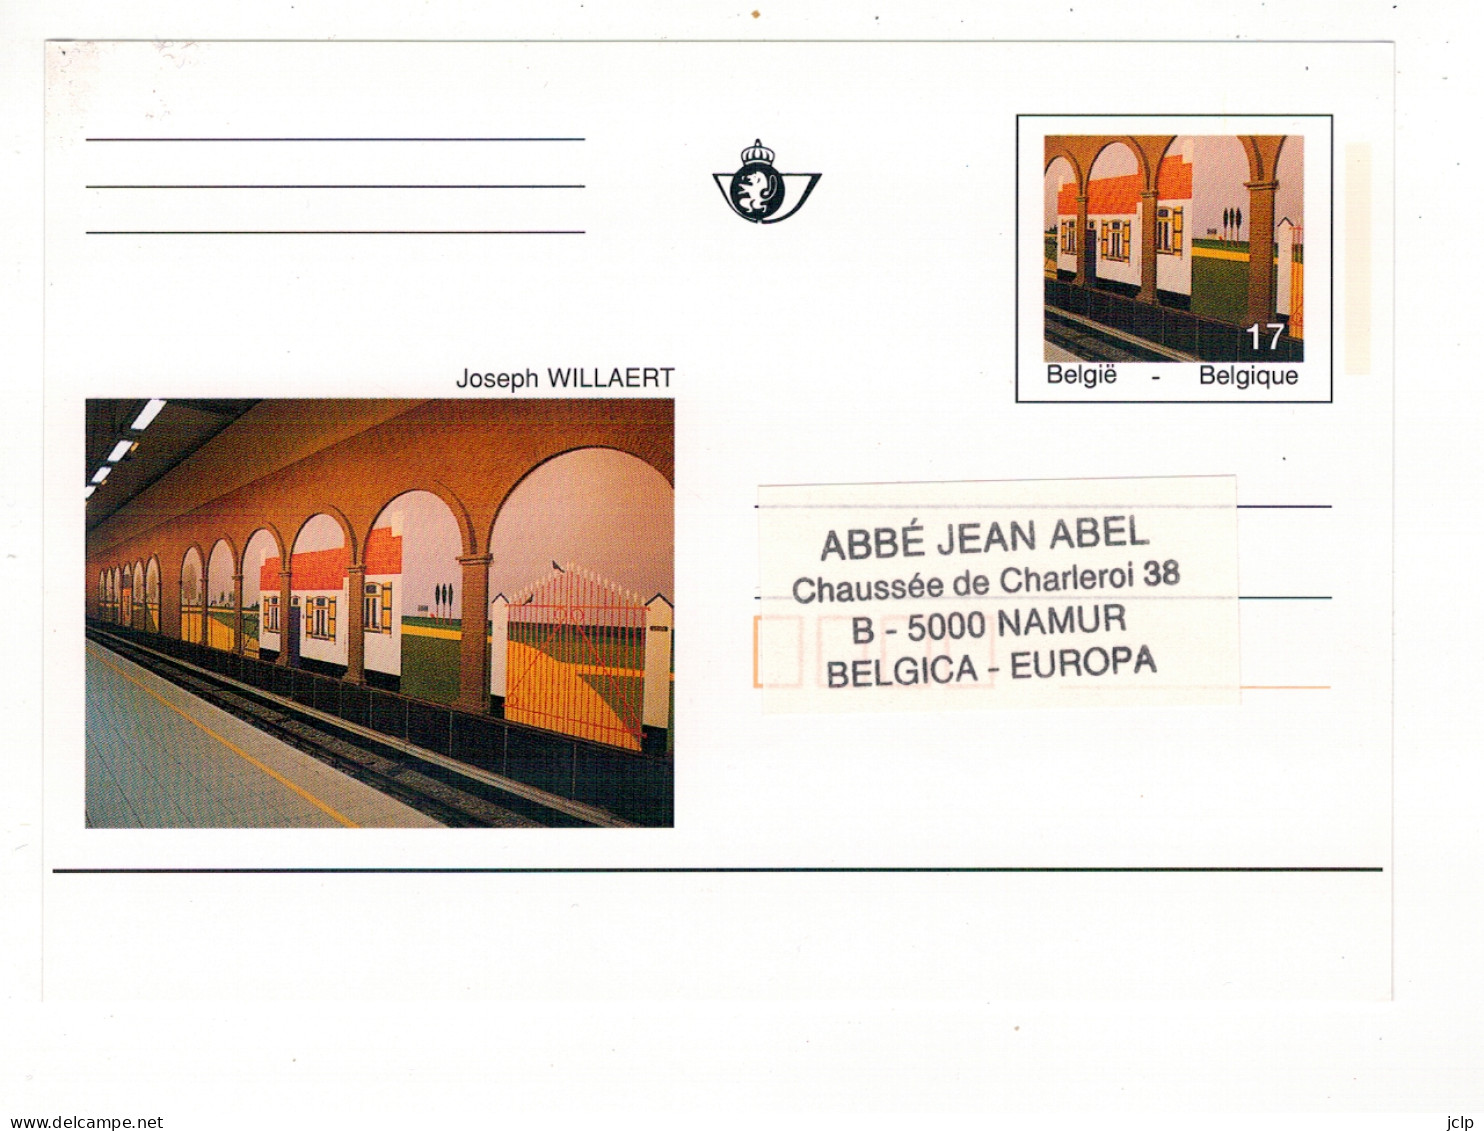 1997 - Oeuvres D'art Du Metro Bruxellois - Joseph Willaert - Souvenir Cards - Joint Issues [HK]